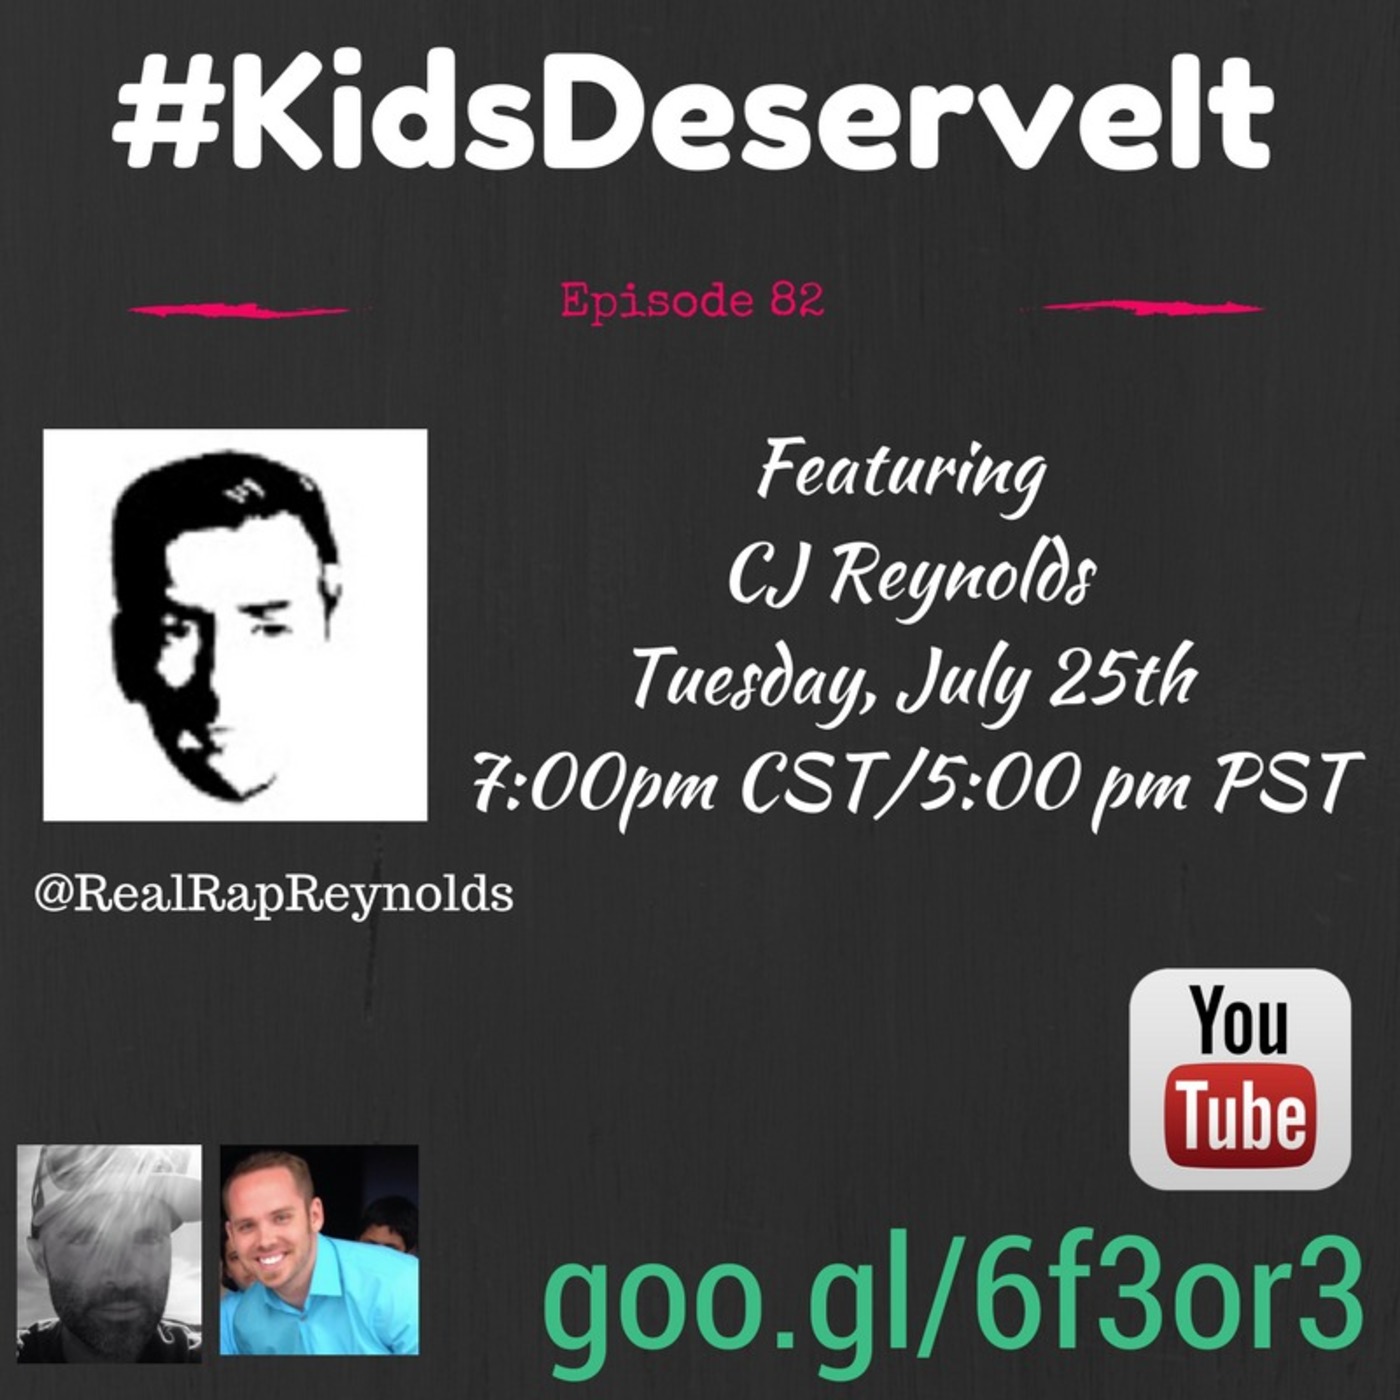 Episode 82 of #KidsDeserveIt with CJ Reynolds